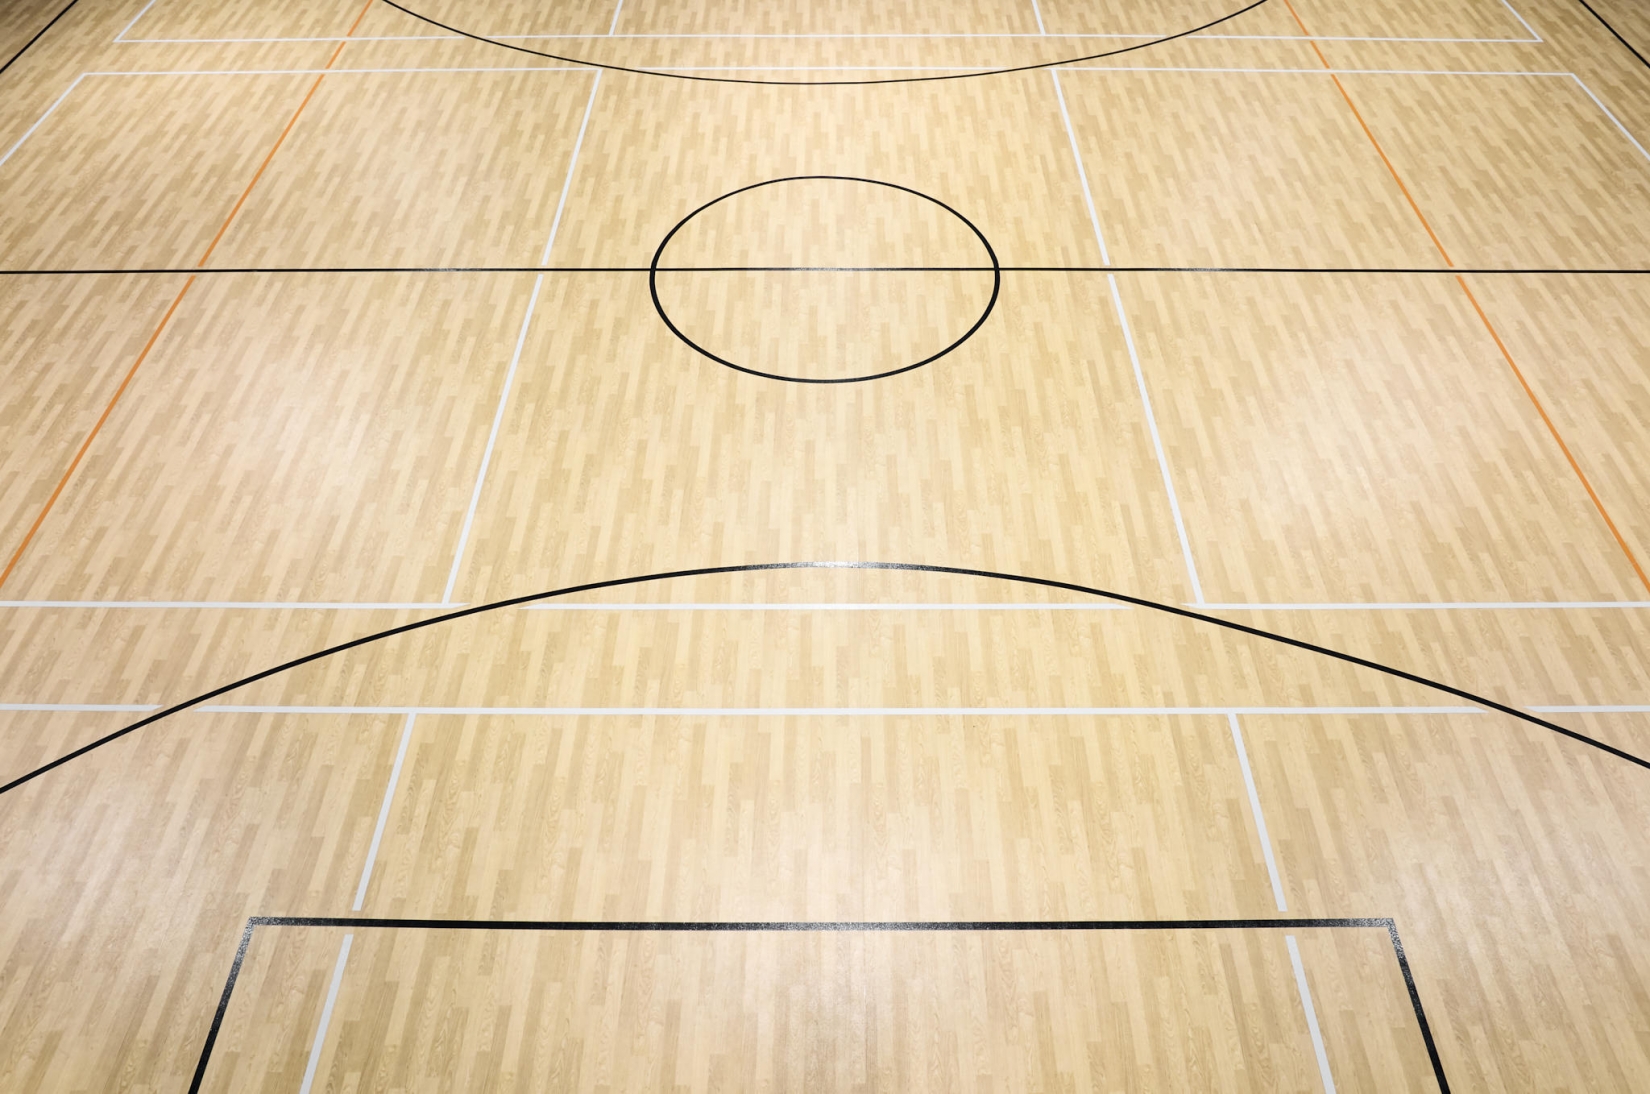 Taraflex Multi-Use Sports Floor for Schools